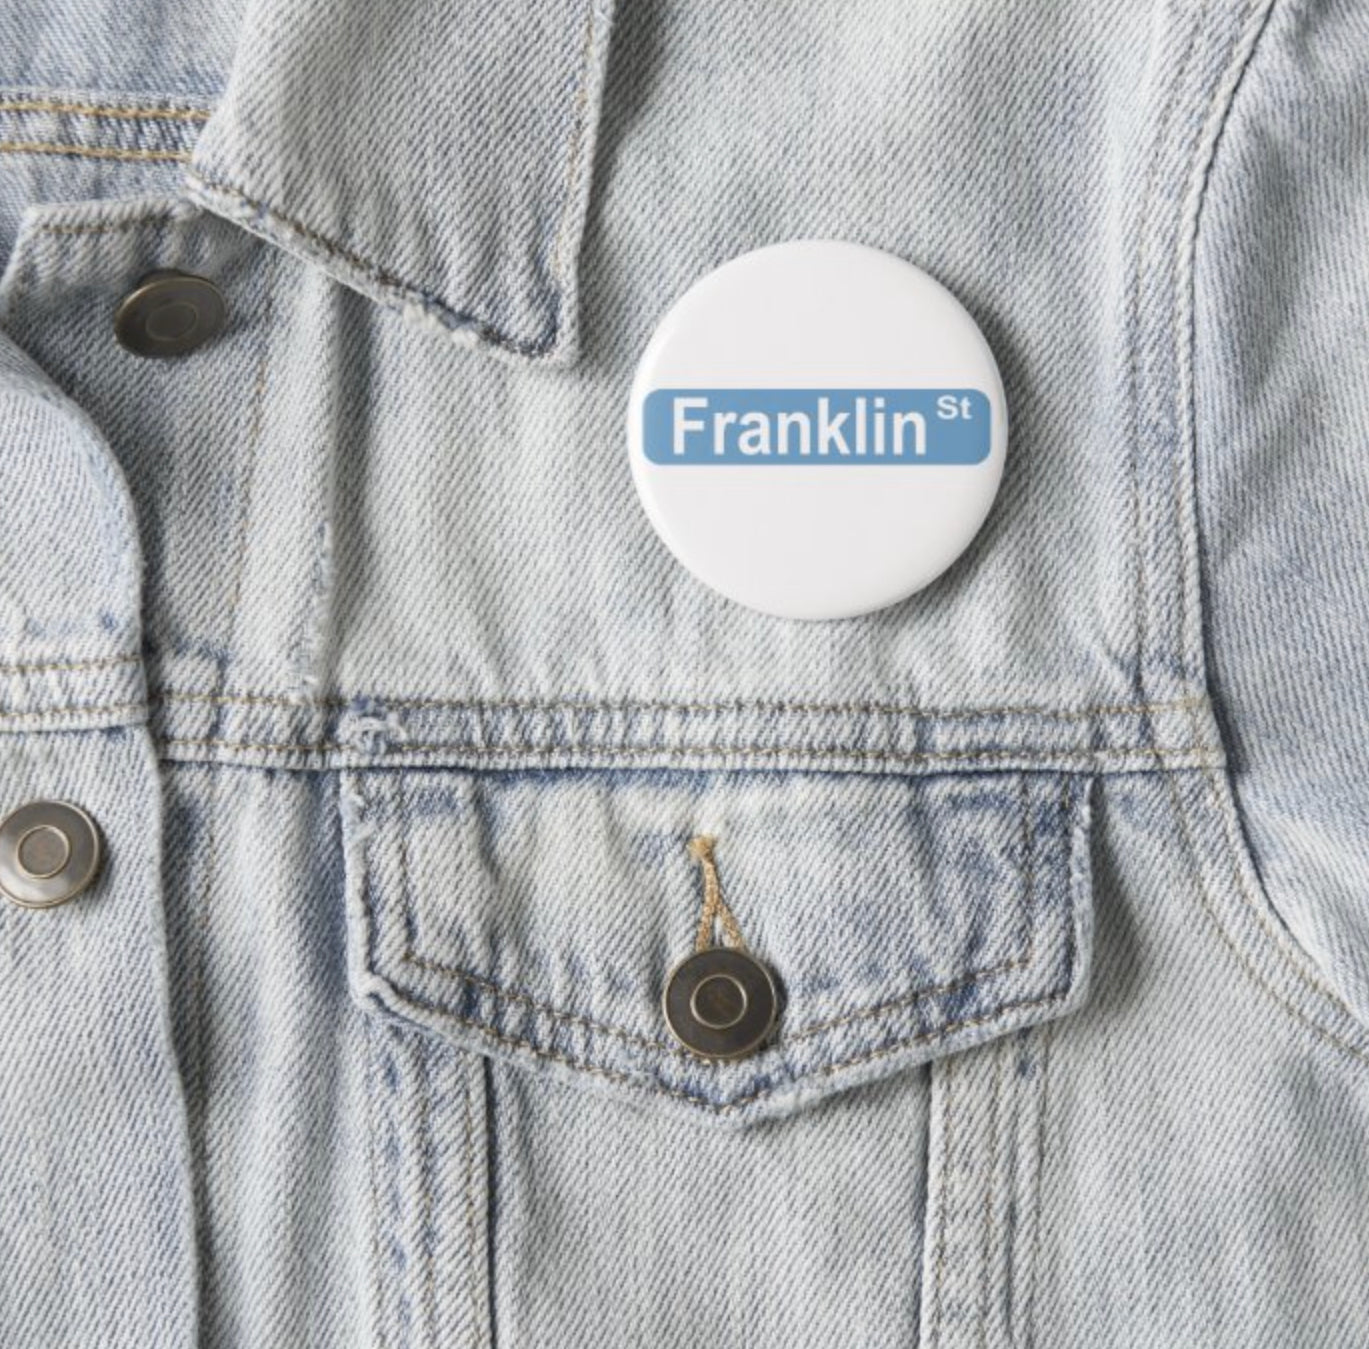 Franklin Street Button Pin by Shrunken Head Brand